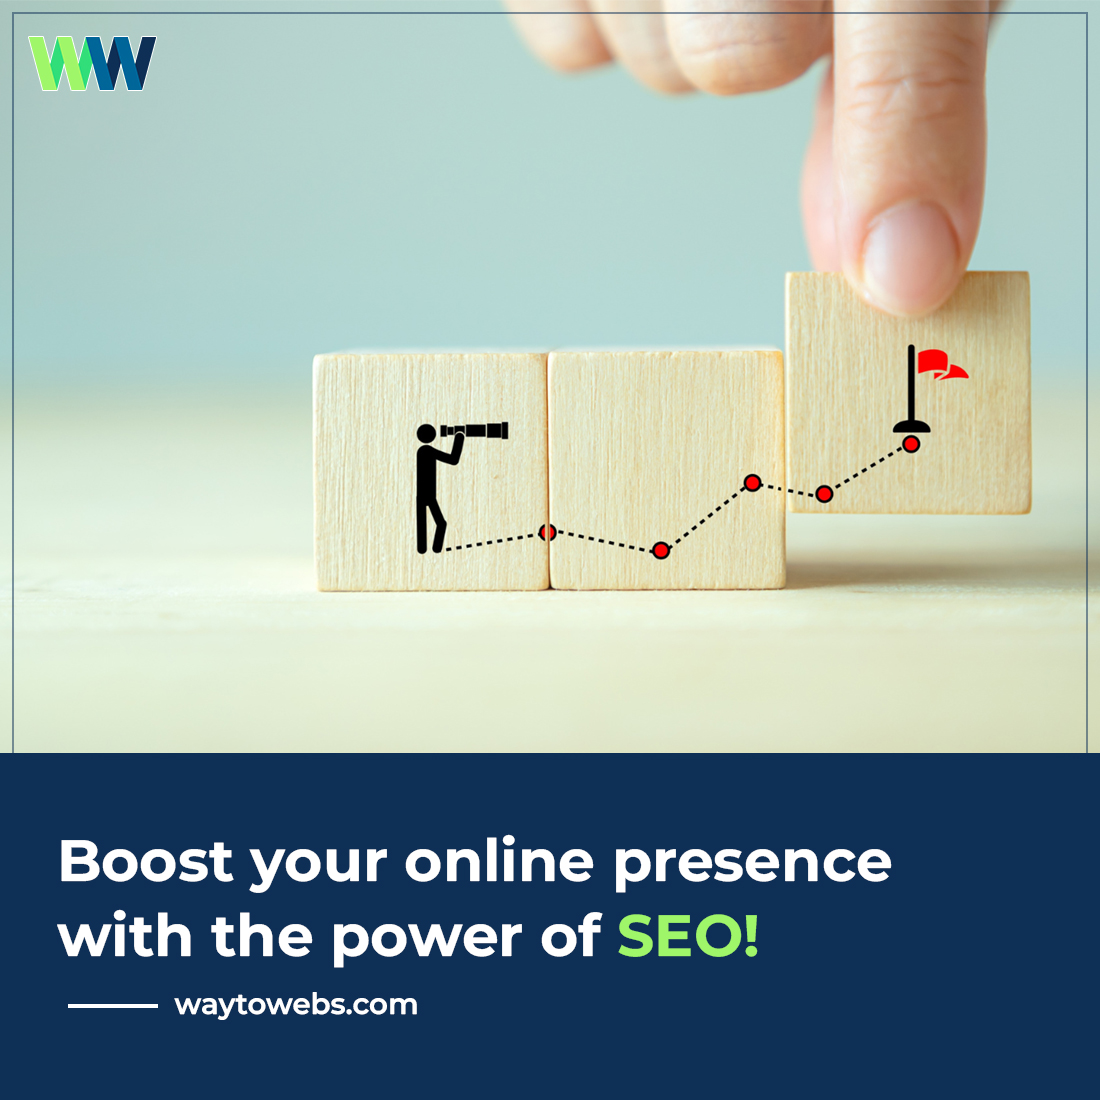 Boost your online presence with the power of SEO! #seo #digitalmarketing #DigitalStrategy #SearchEngineOptimization #OnlineMarketing #SEM #GoogleRankings #SocialMediaMarketing #KeywordResearch #SEOtips #DigitalPresence #ternding #waytowebs waytowebs.com